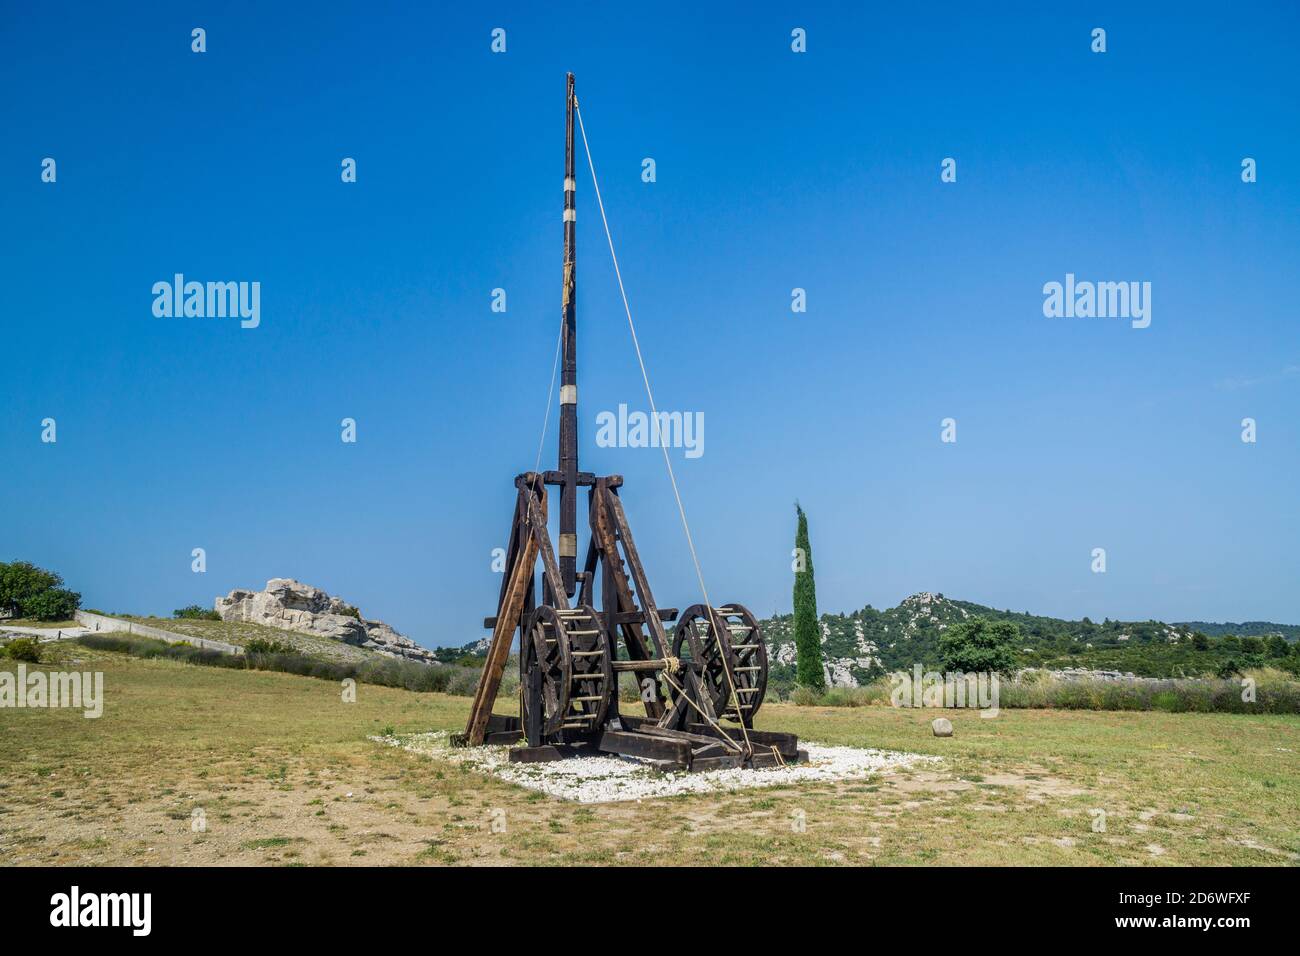 medieval trebuchet catapult siege engine displayed at the ruined castle of Château des Baux-de-Provence, Bouches-du-Rhône department, Southern France Stock Photo